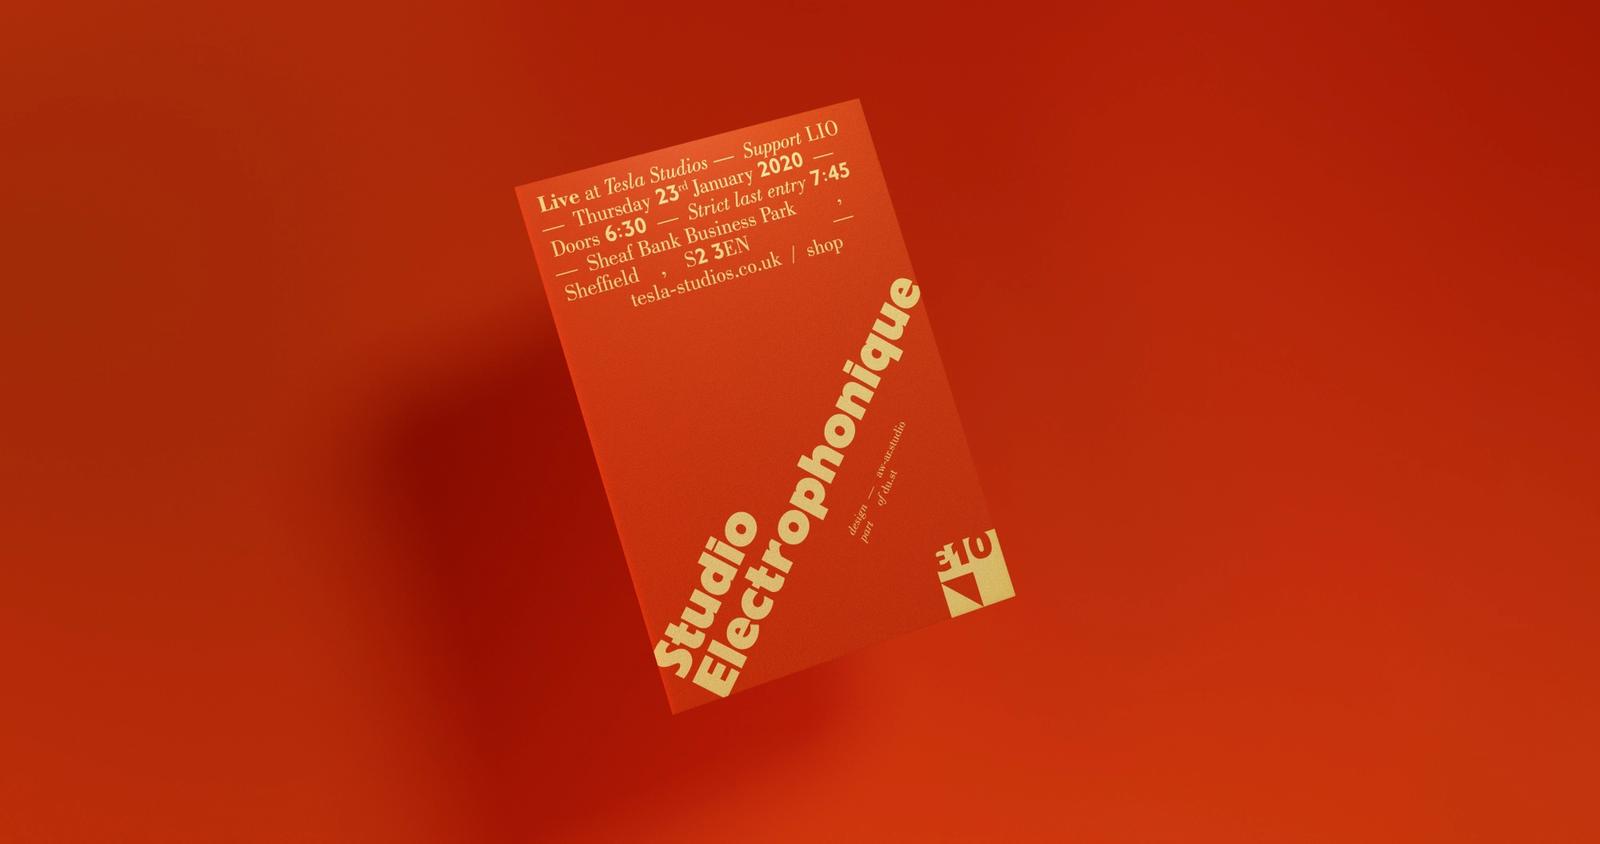 Flyer designed for Studio Electrophonique.